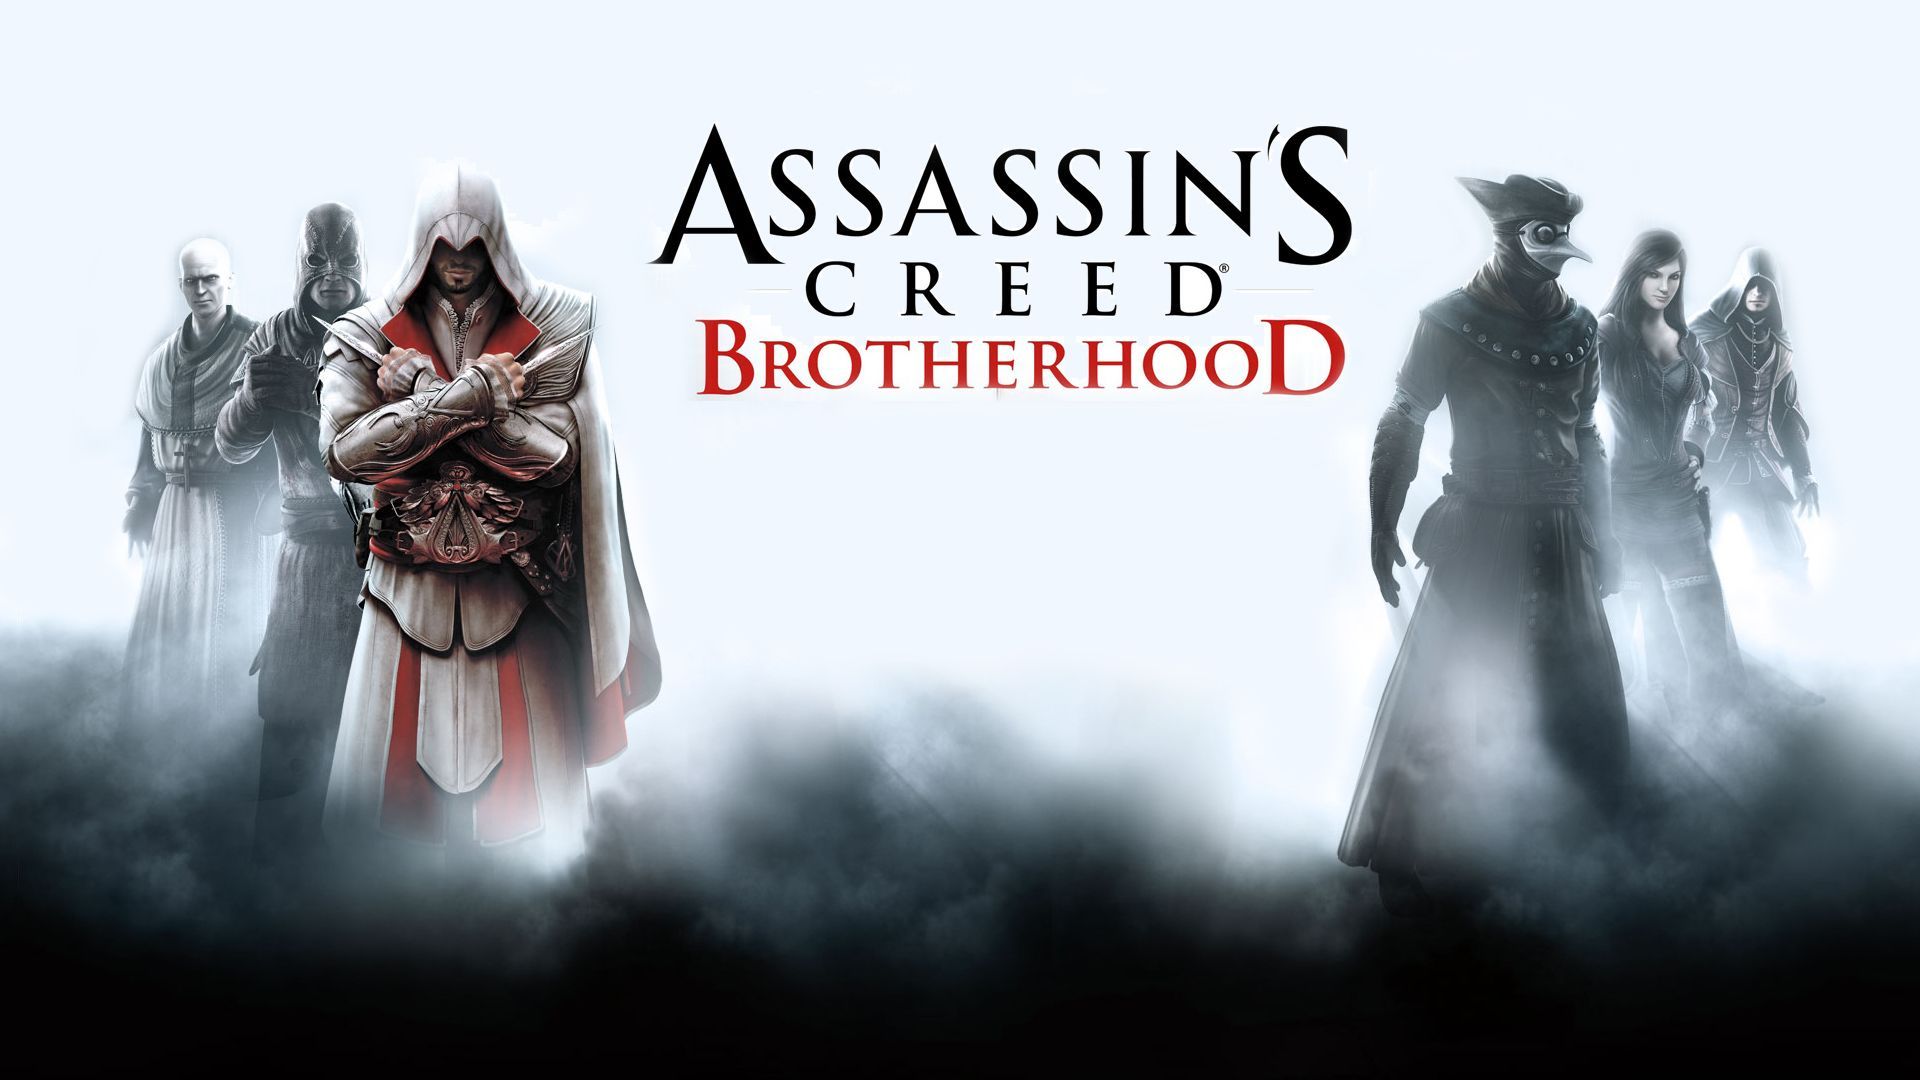 Assassin's Creed Brotherhood 1080p Wallpapers | HD Wallpapers